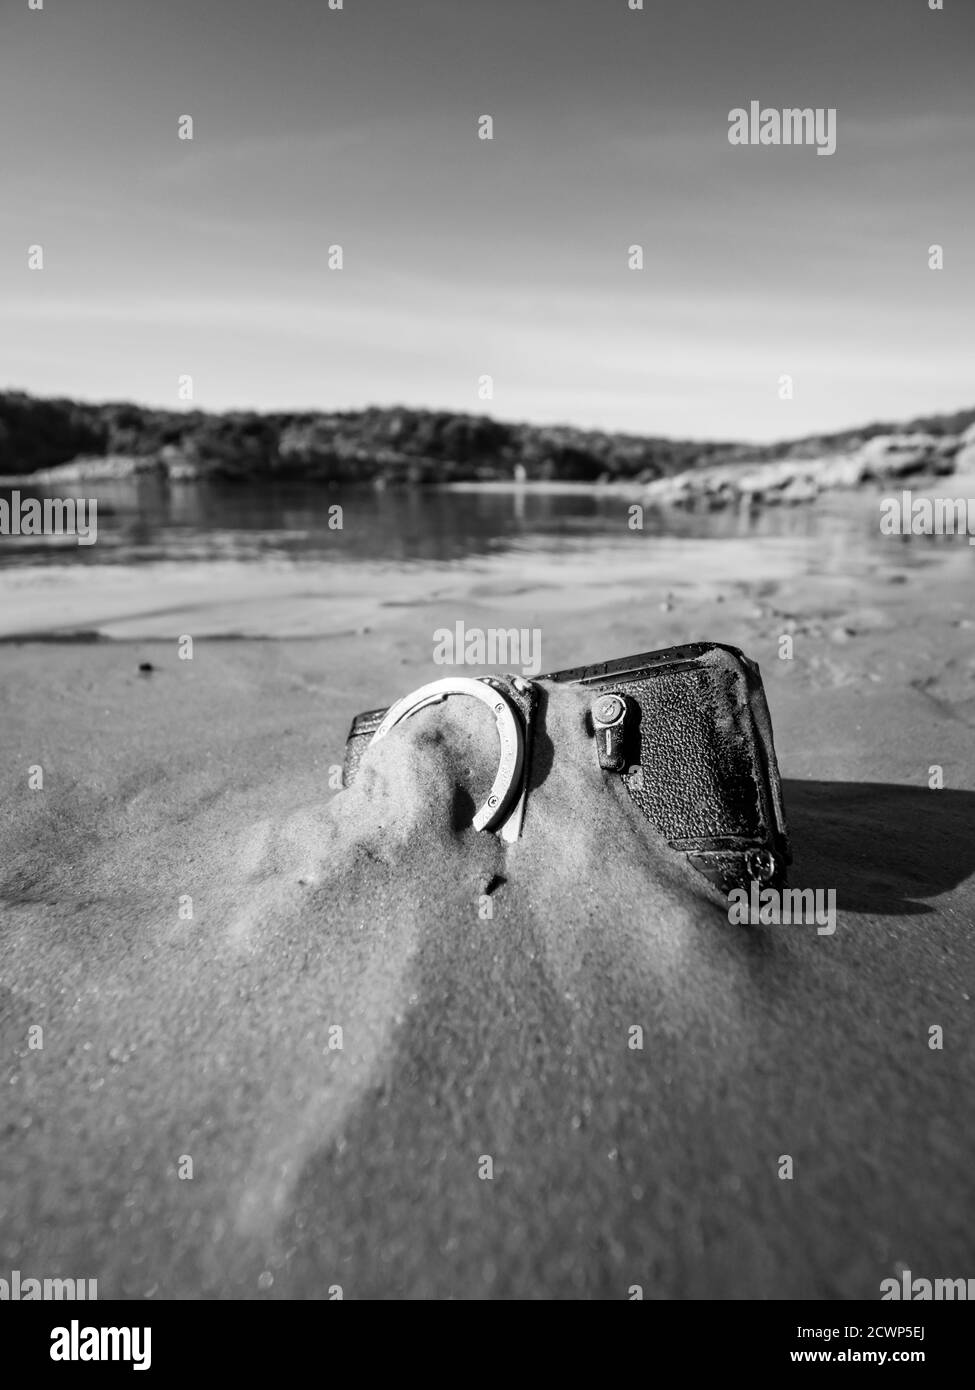 Nikon retro classic SLR film camera body on beach inverted upside down upsidedown calm calmness smooth serenity serene water surface Stock Photo